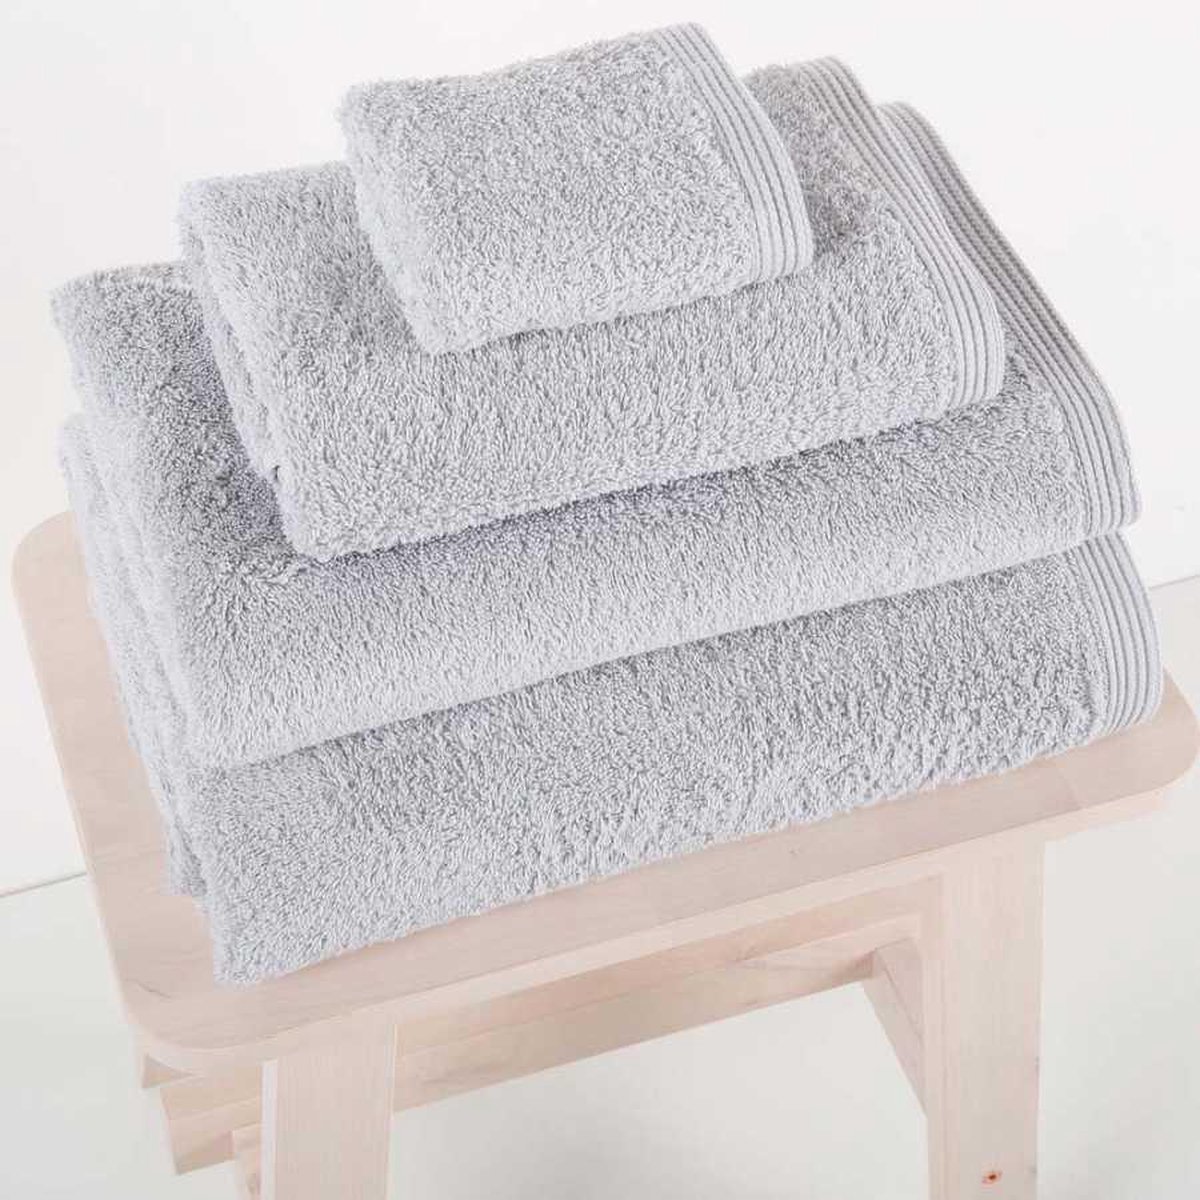 Graccioza SOREMA handdoek (2 stuks) gekamd katoen, 70x140cm - Silver (licht grijs)